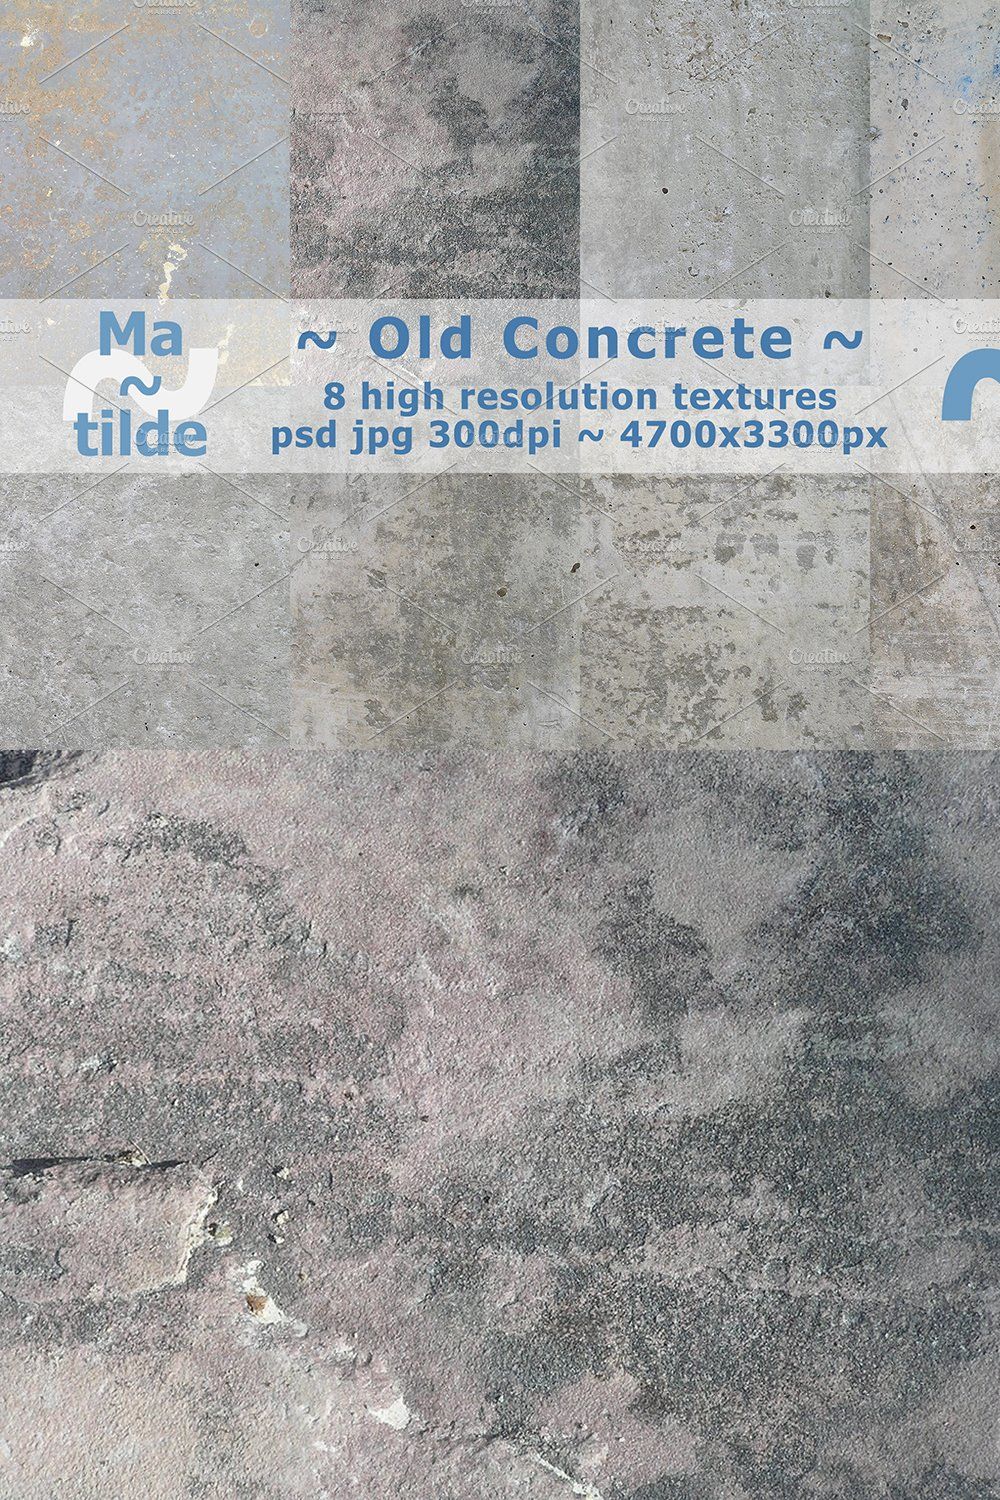 Old Concrete pinterest preview image.